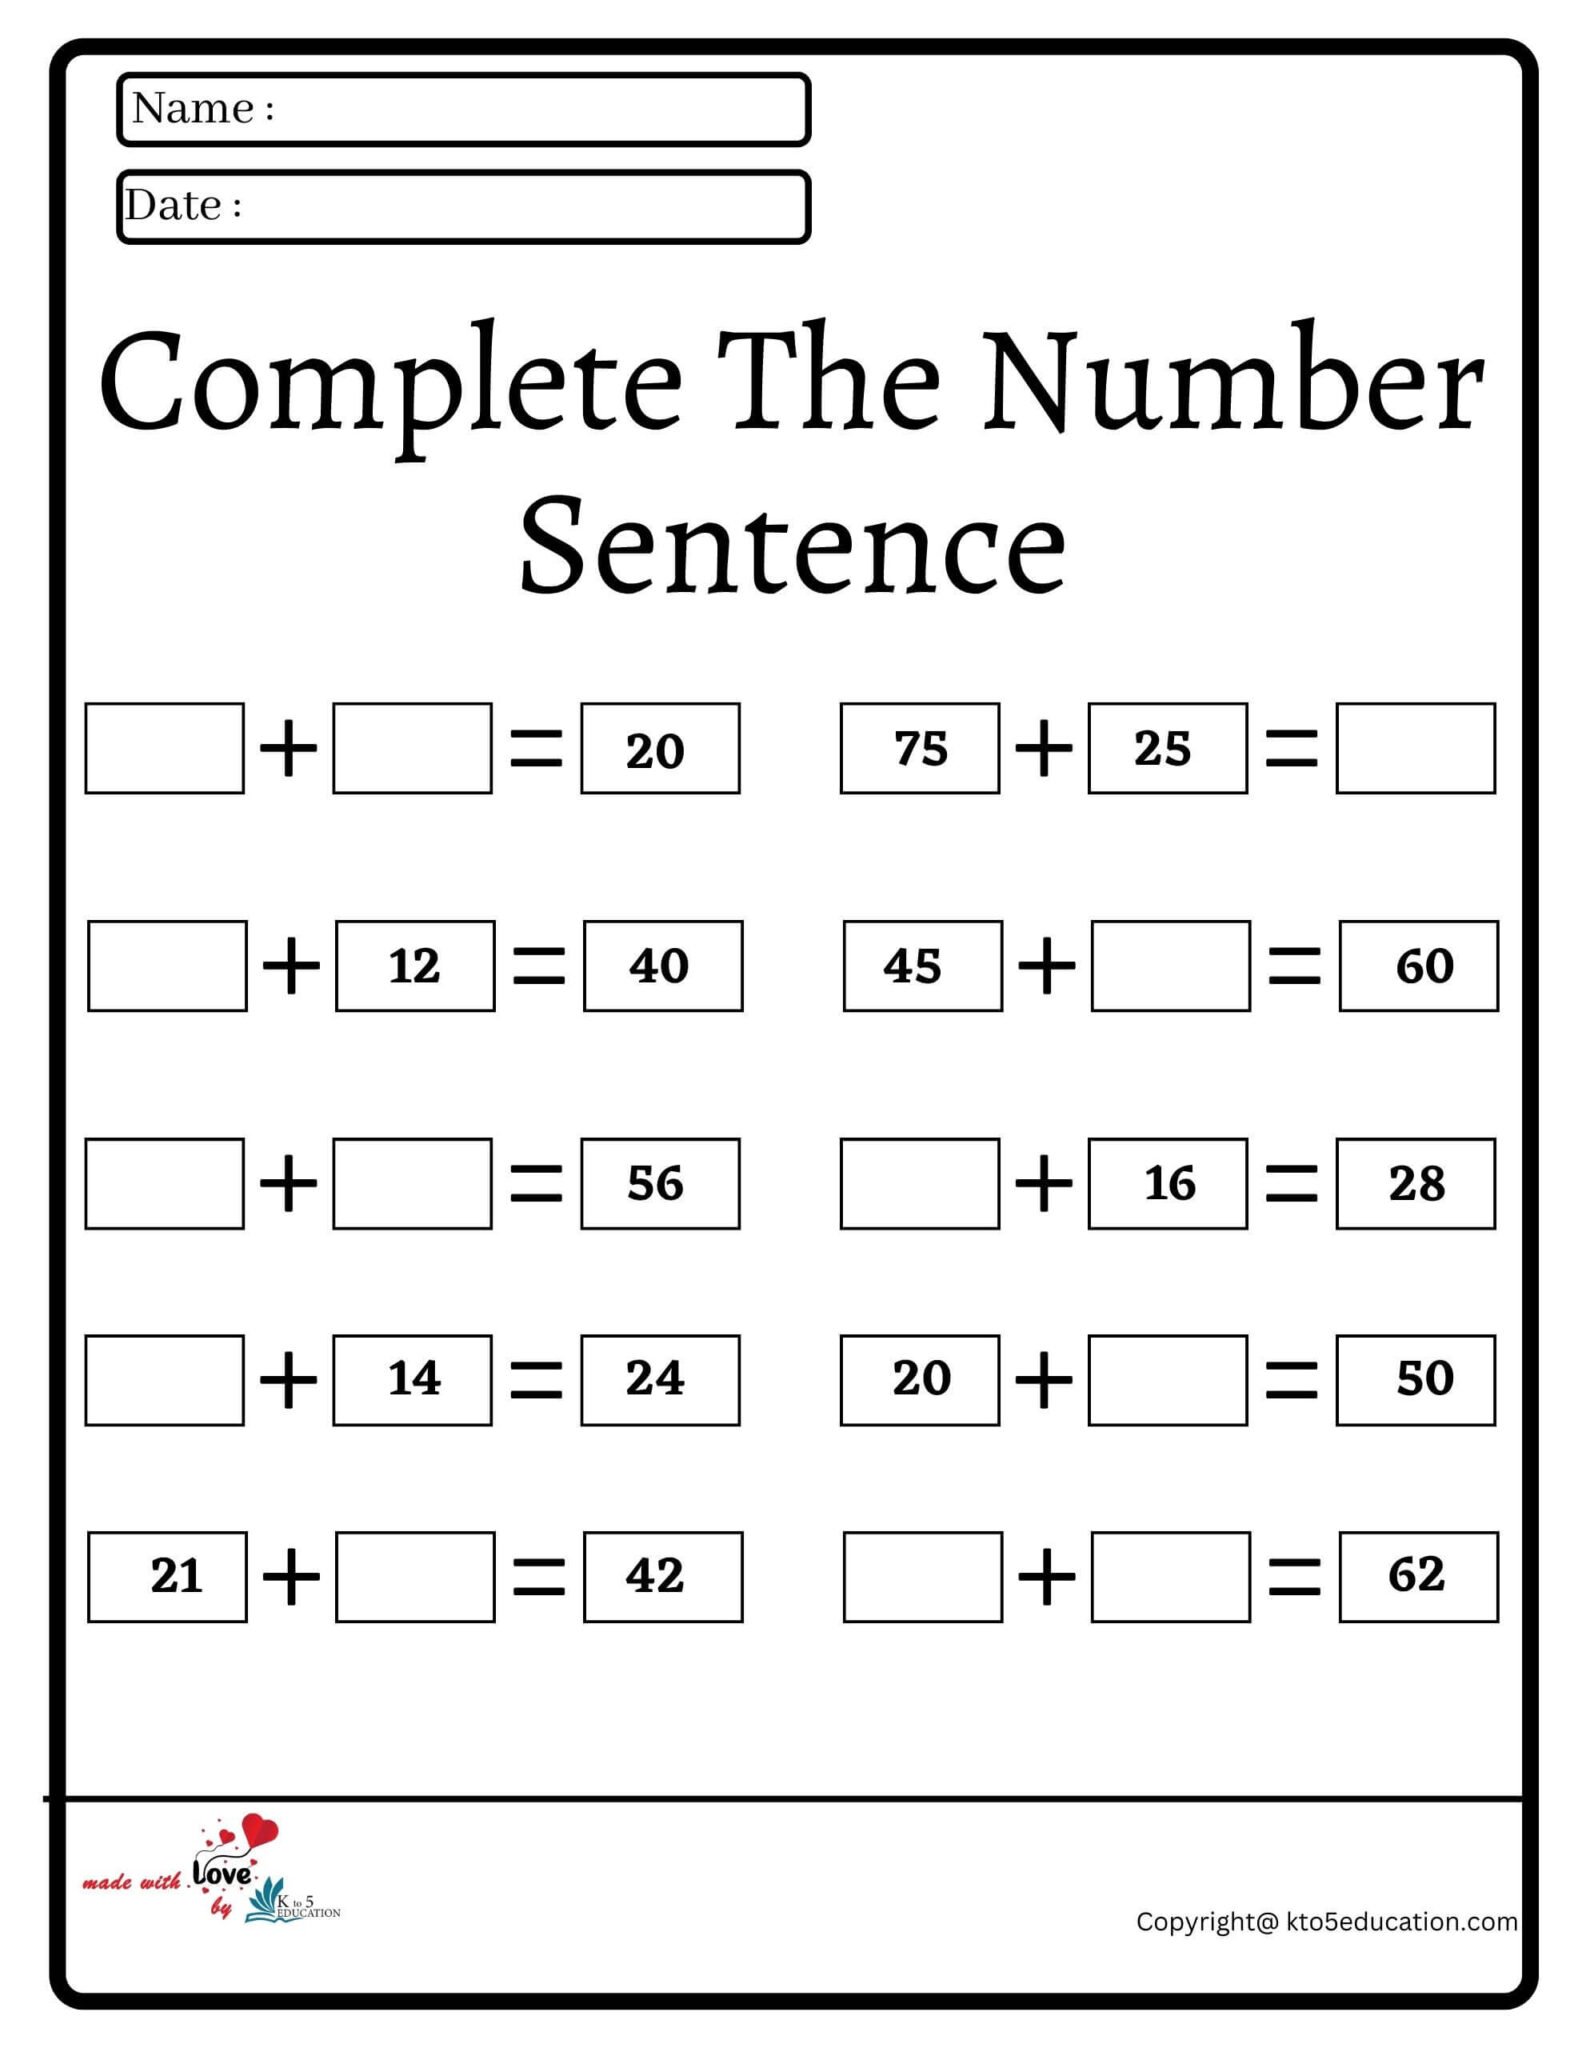 complex-and-compound-sentences-worksheets-foto-kolekcija